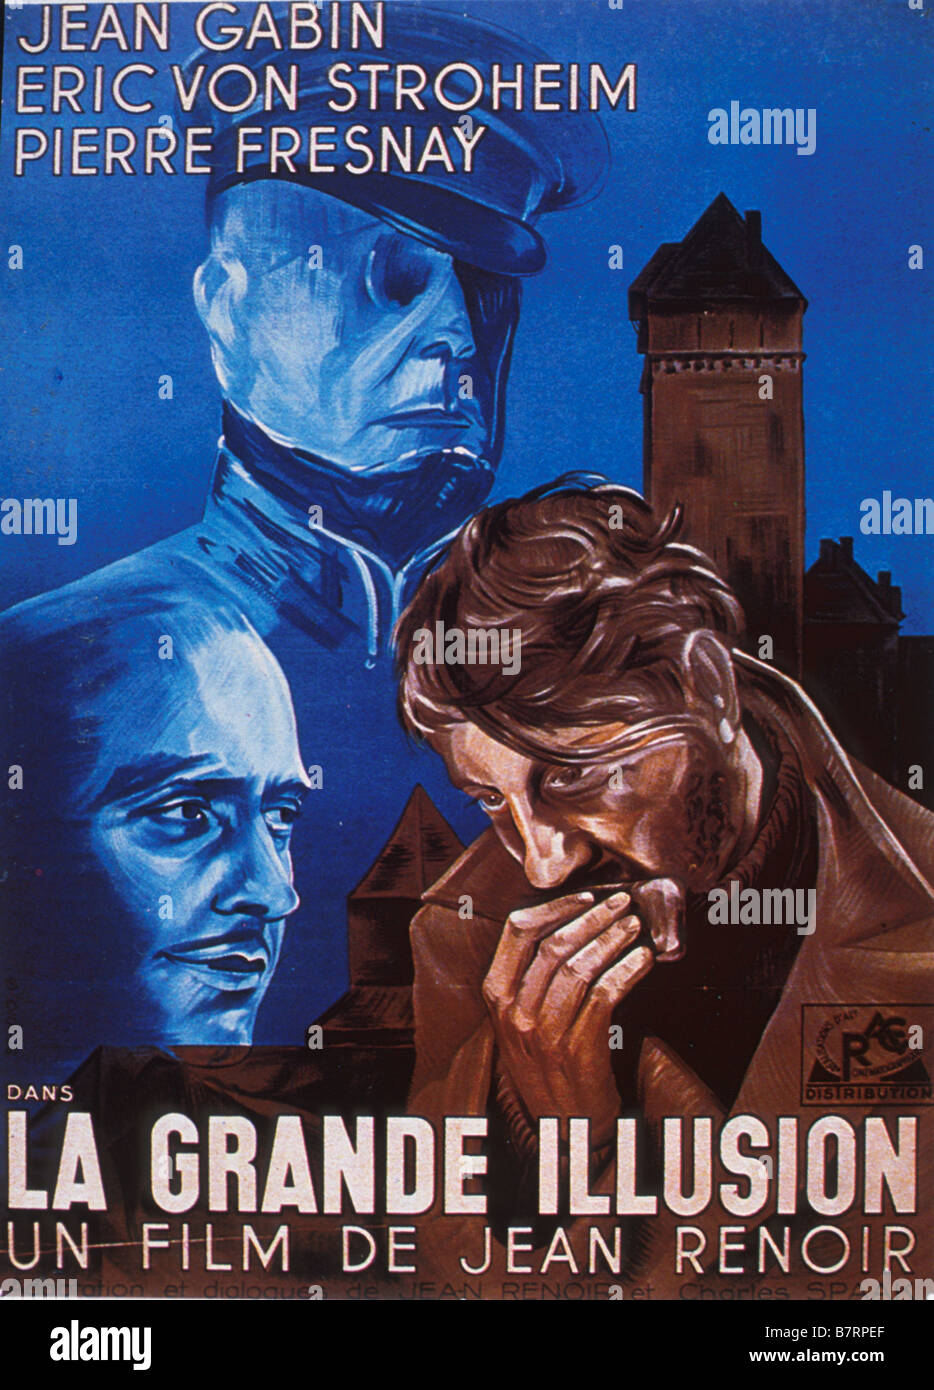 La Grande illusion Year: 1937 - France Director: Jean Renoir Movie poster  (FR Stock Photo - Alamy